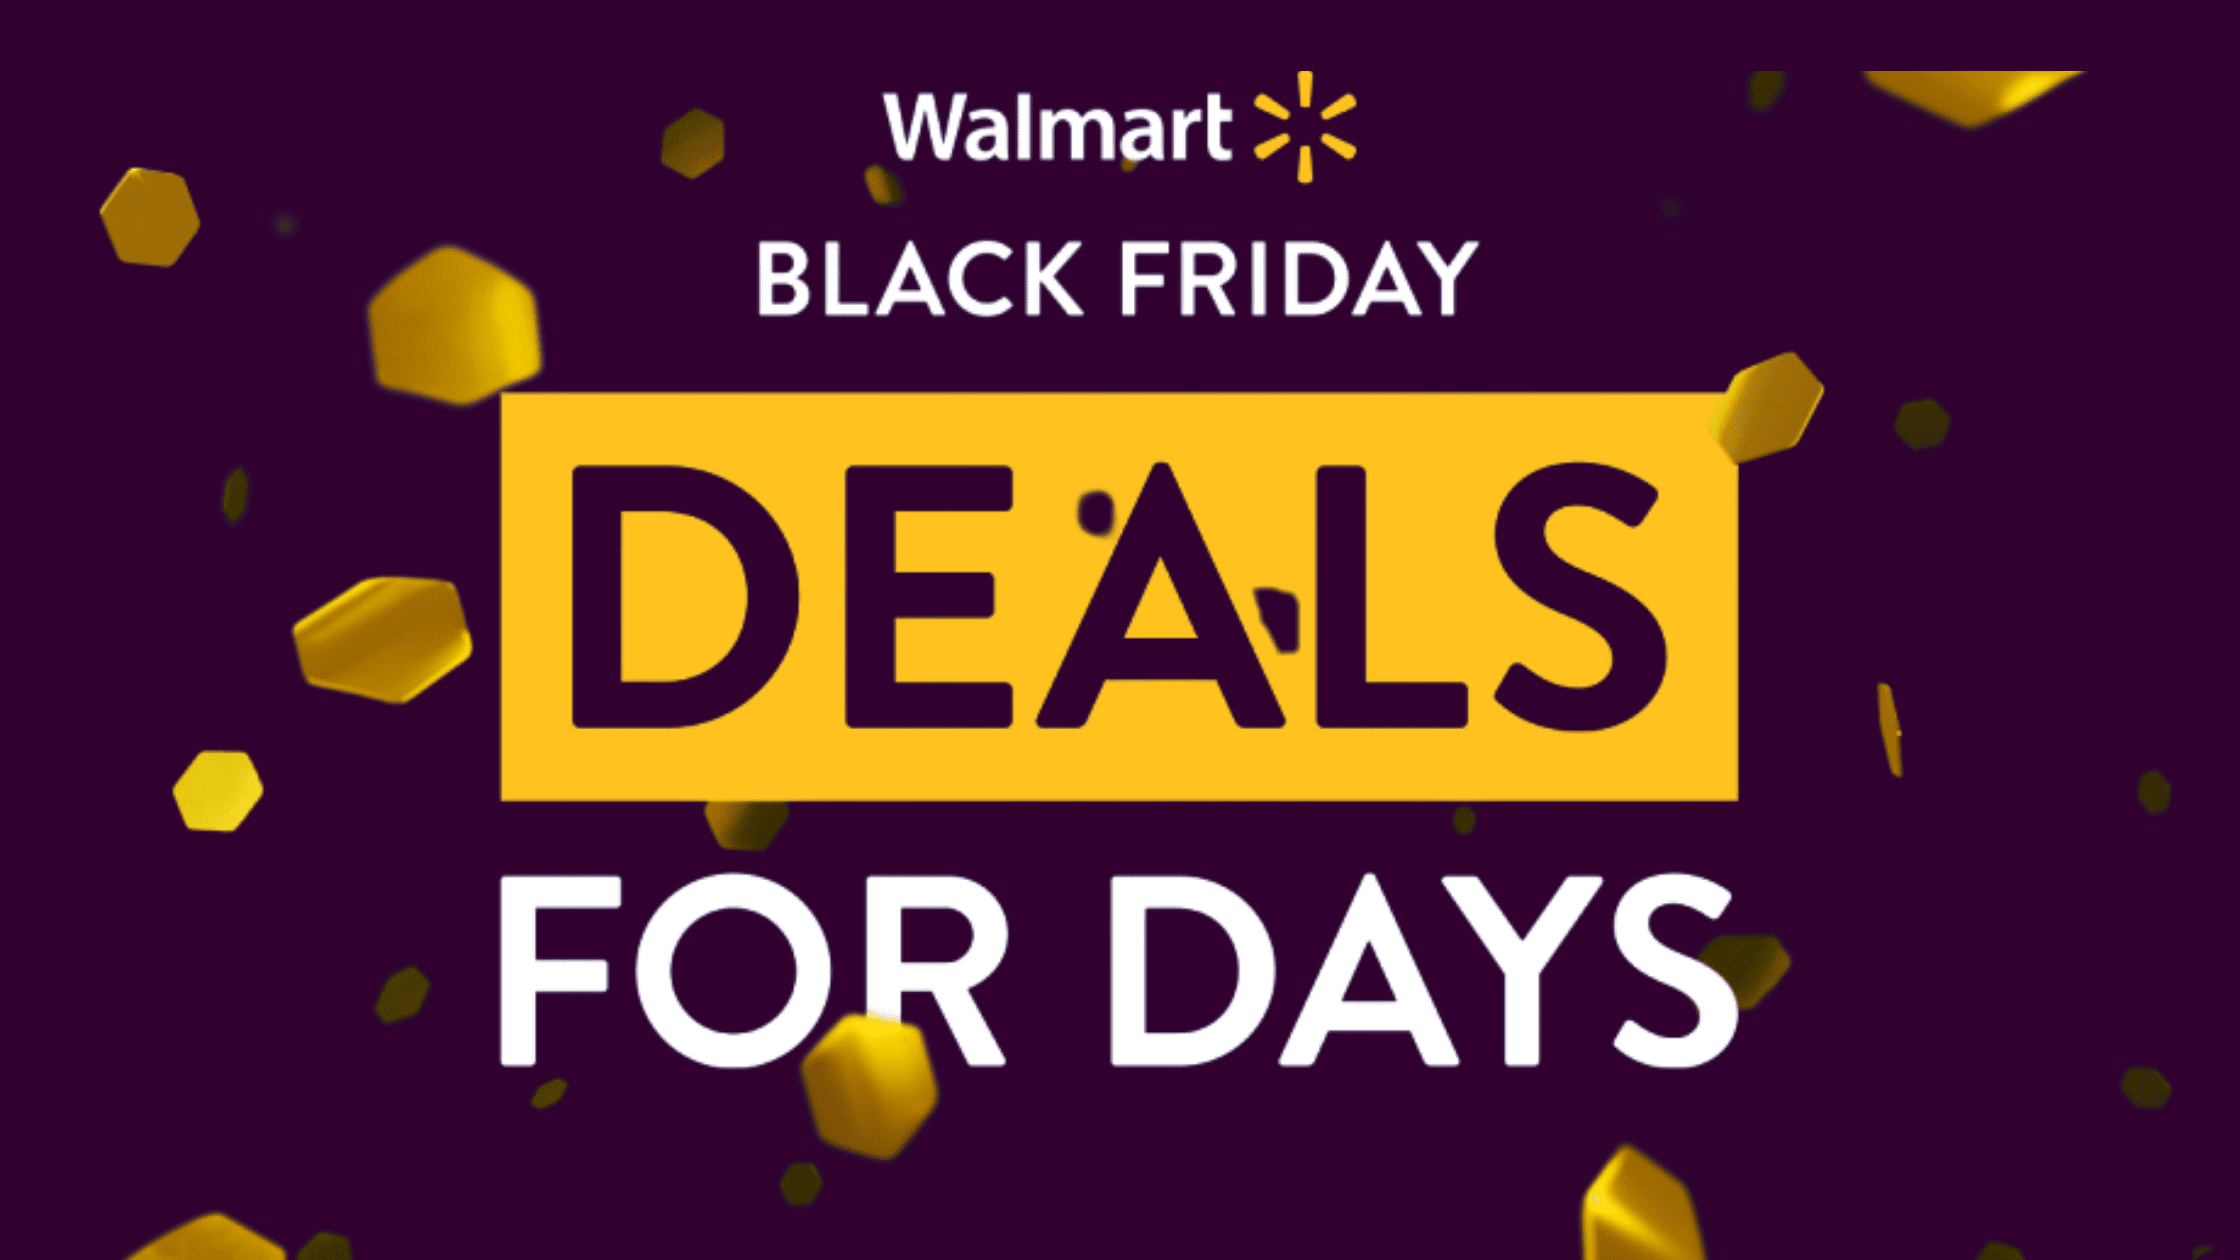 Best Walmart Black Friday Deals in 2021